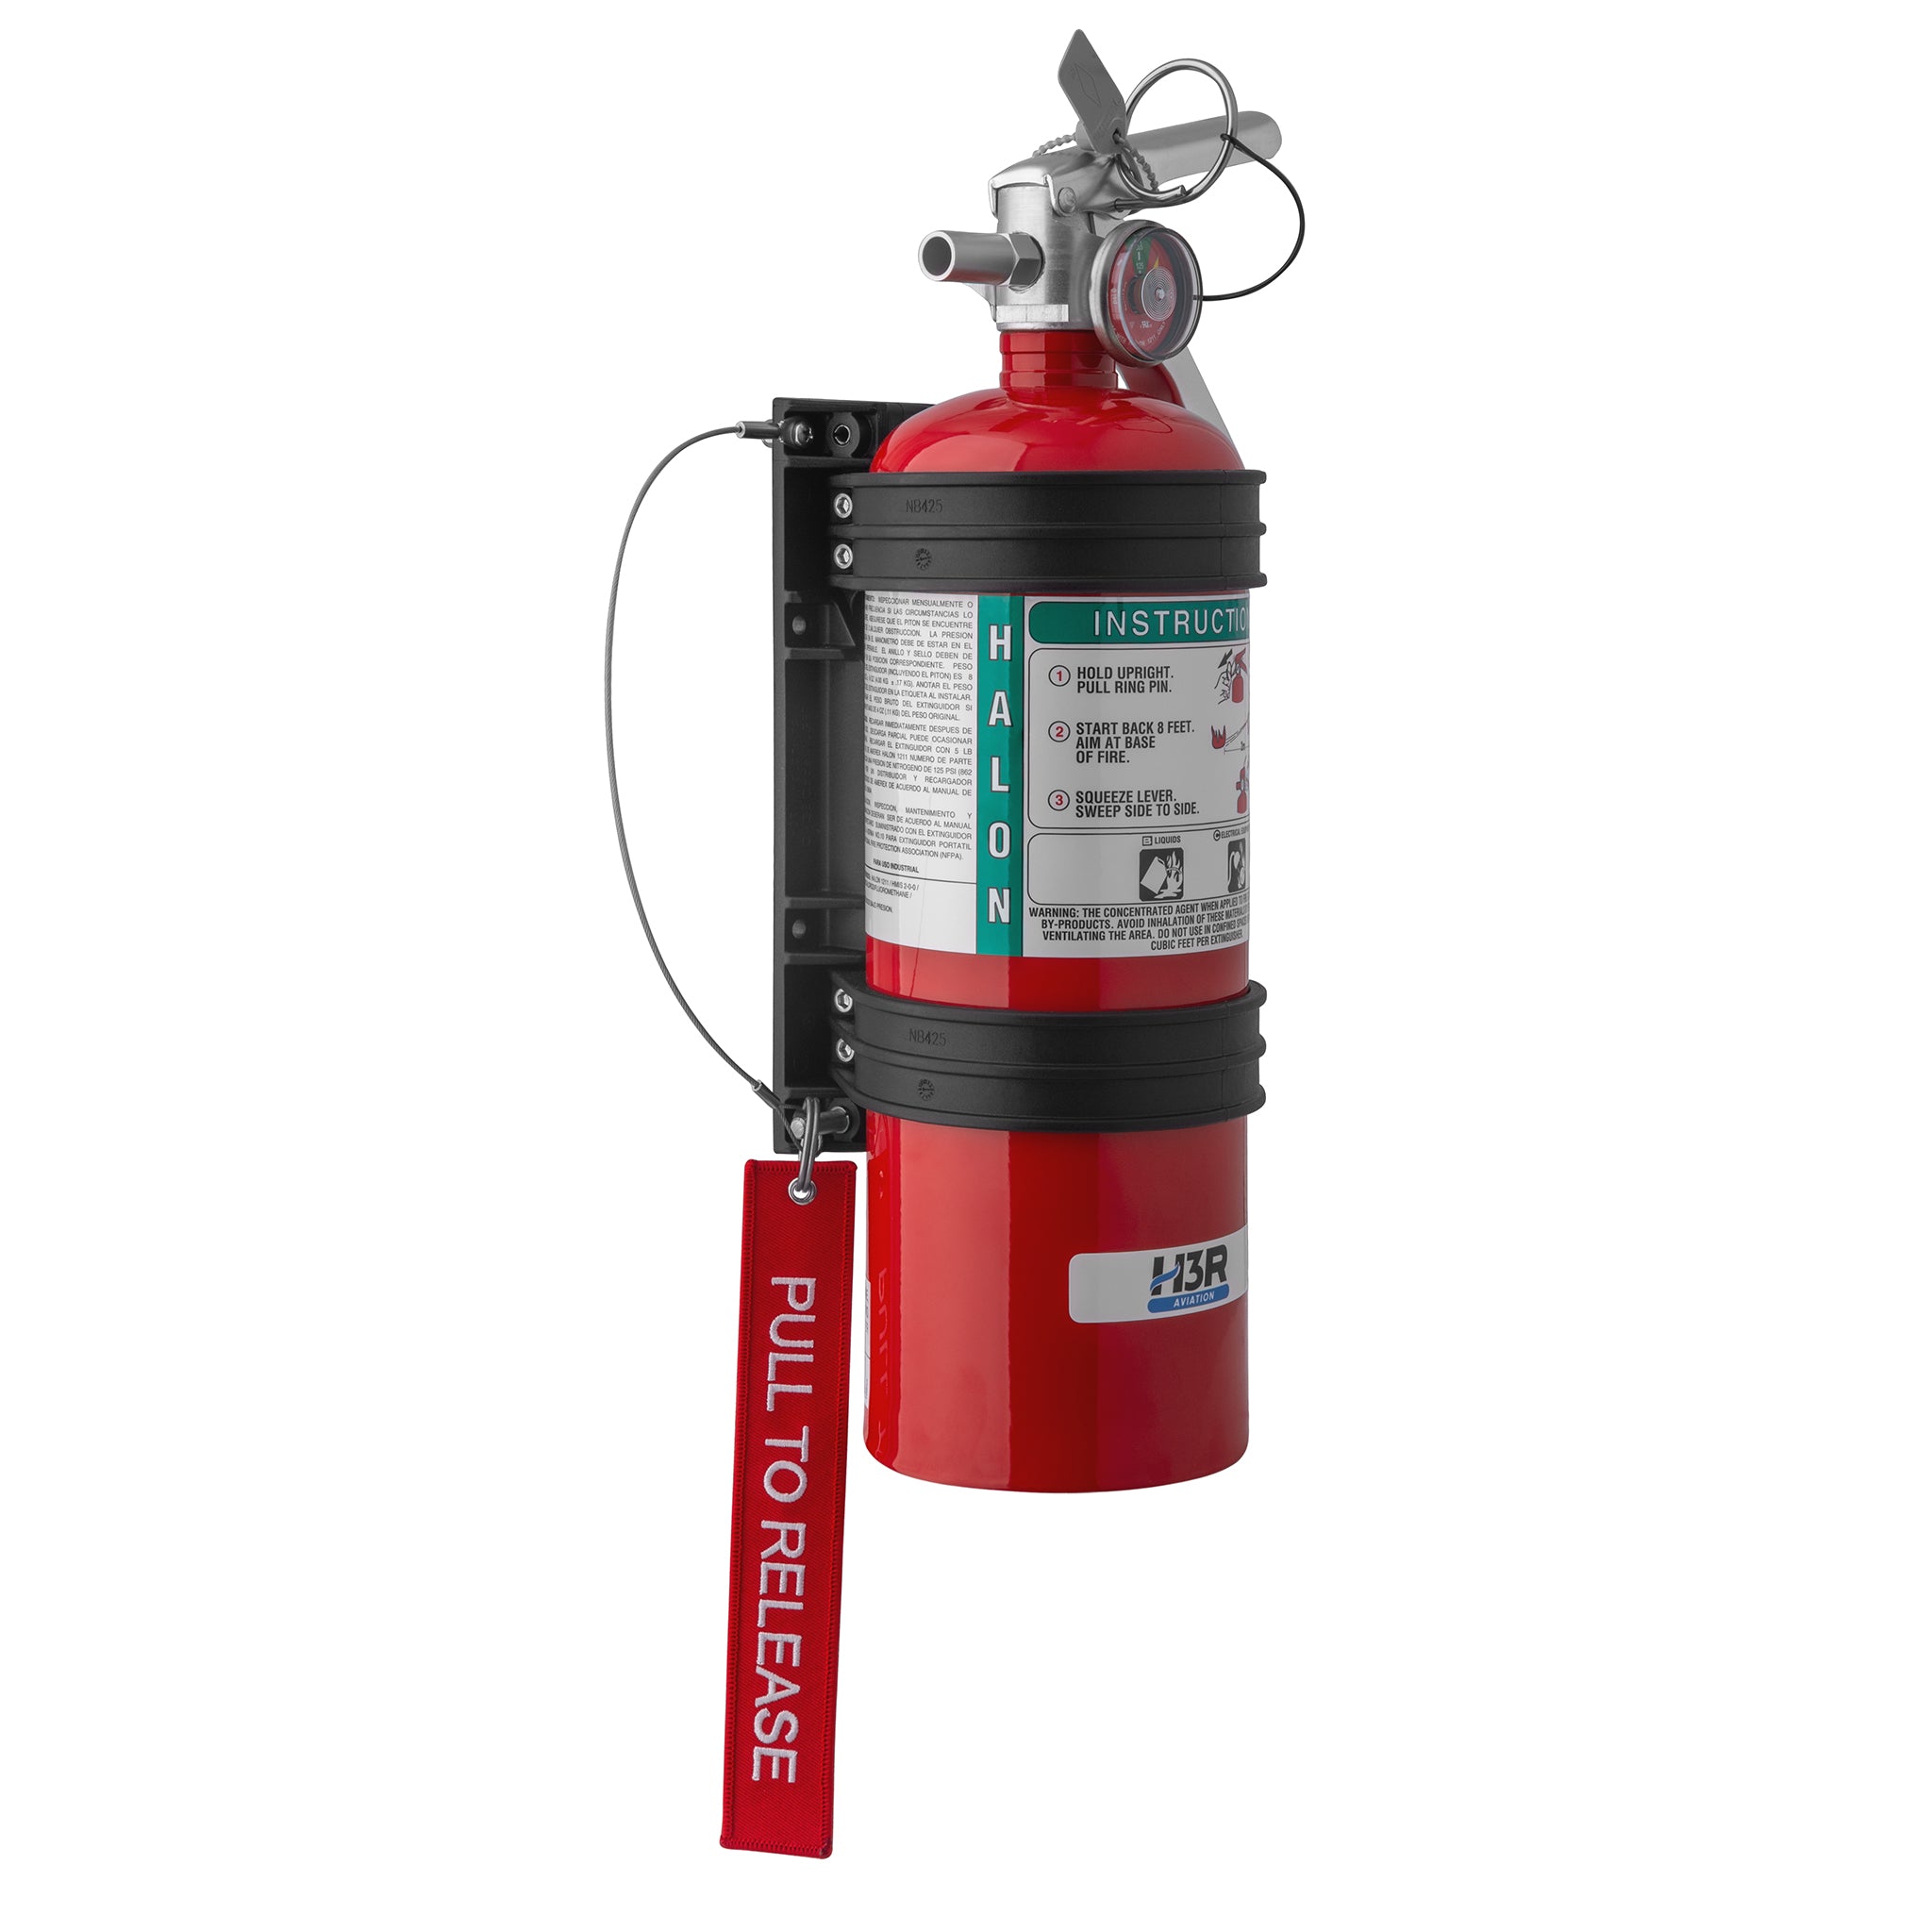 B355T - 5.0 lb. Halon Fire Extinguisher